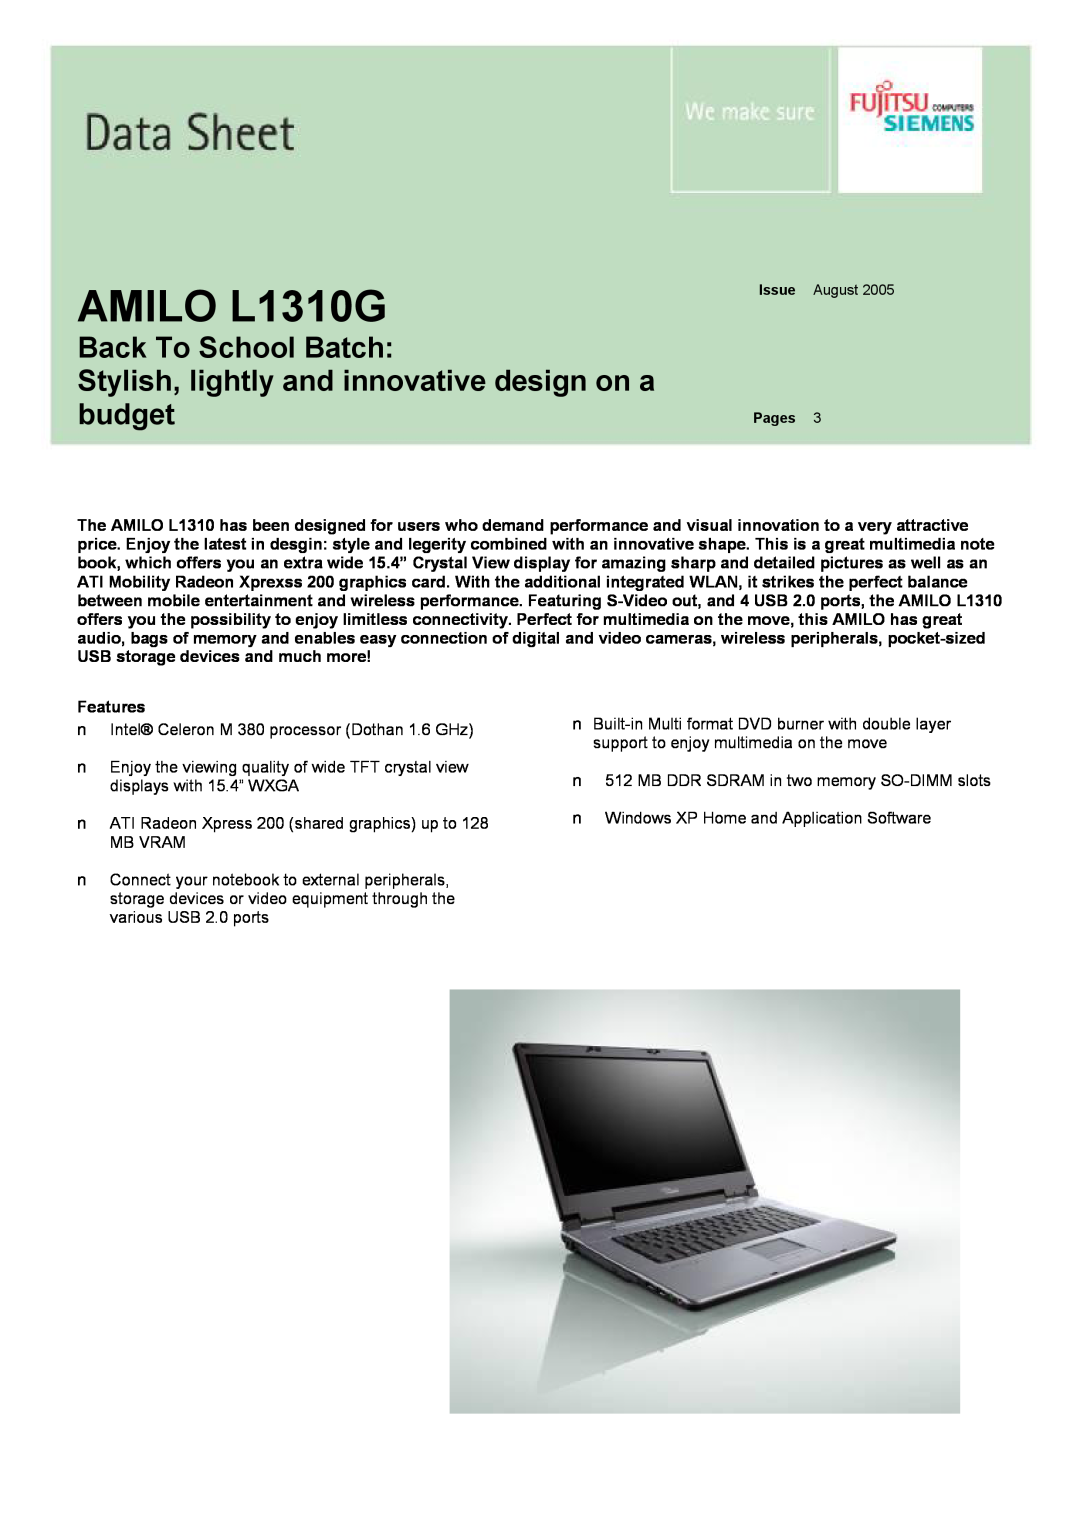 Fujitsu Siemens Computers manual AMILO L1310G, Back To School Batch, Stylish, lightly and innovative design on a budget 